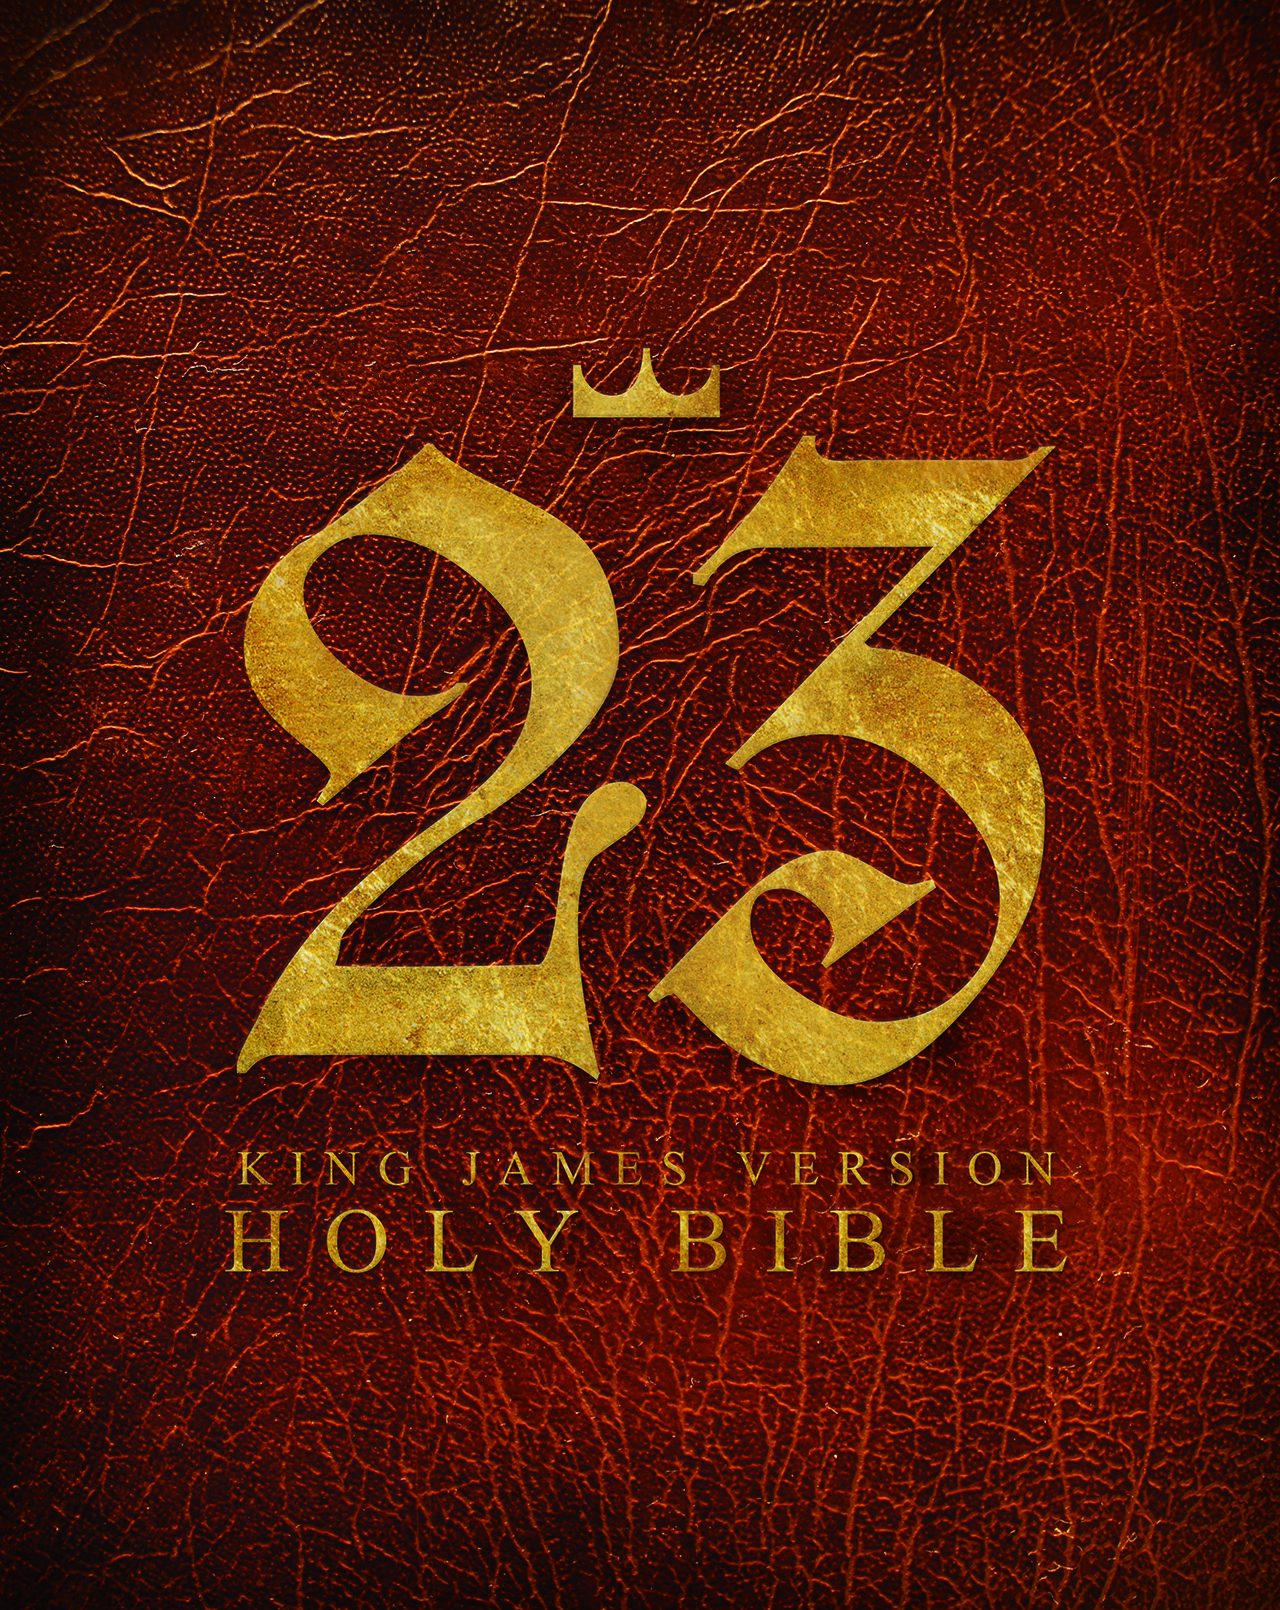 Trent Szente | "Holy Bible, King James version"